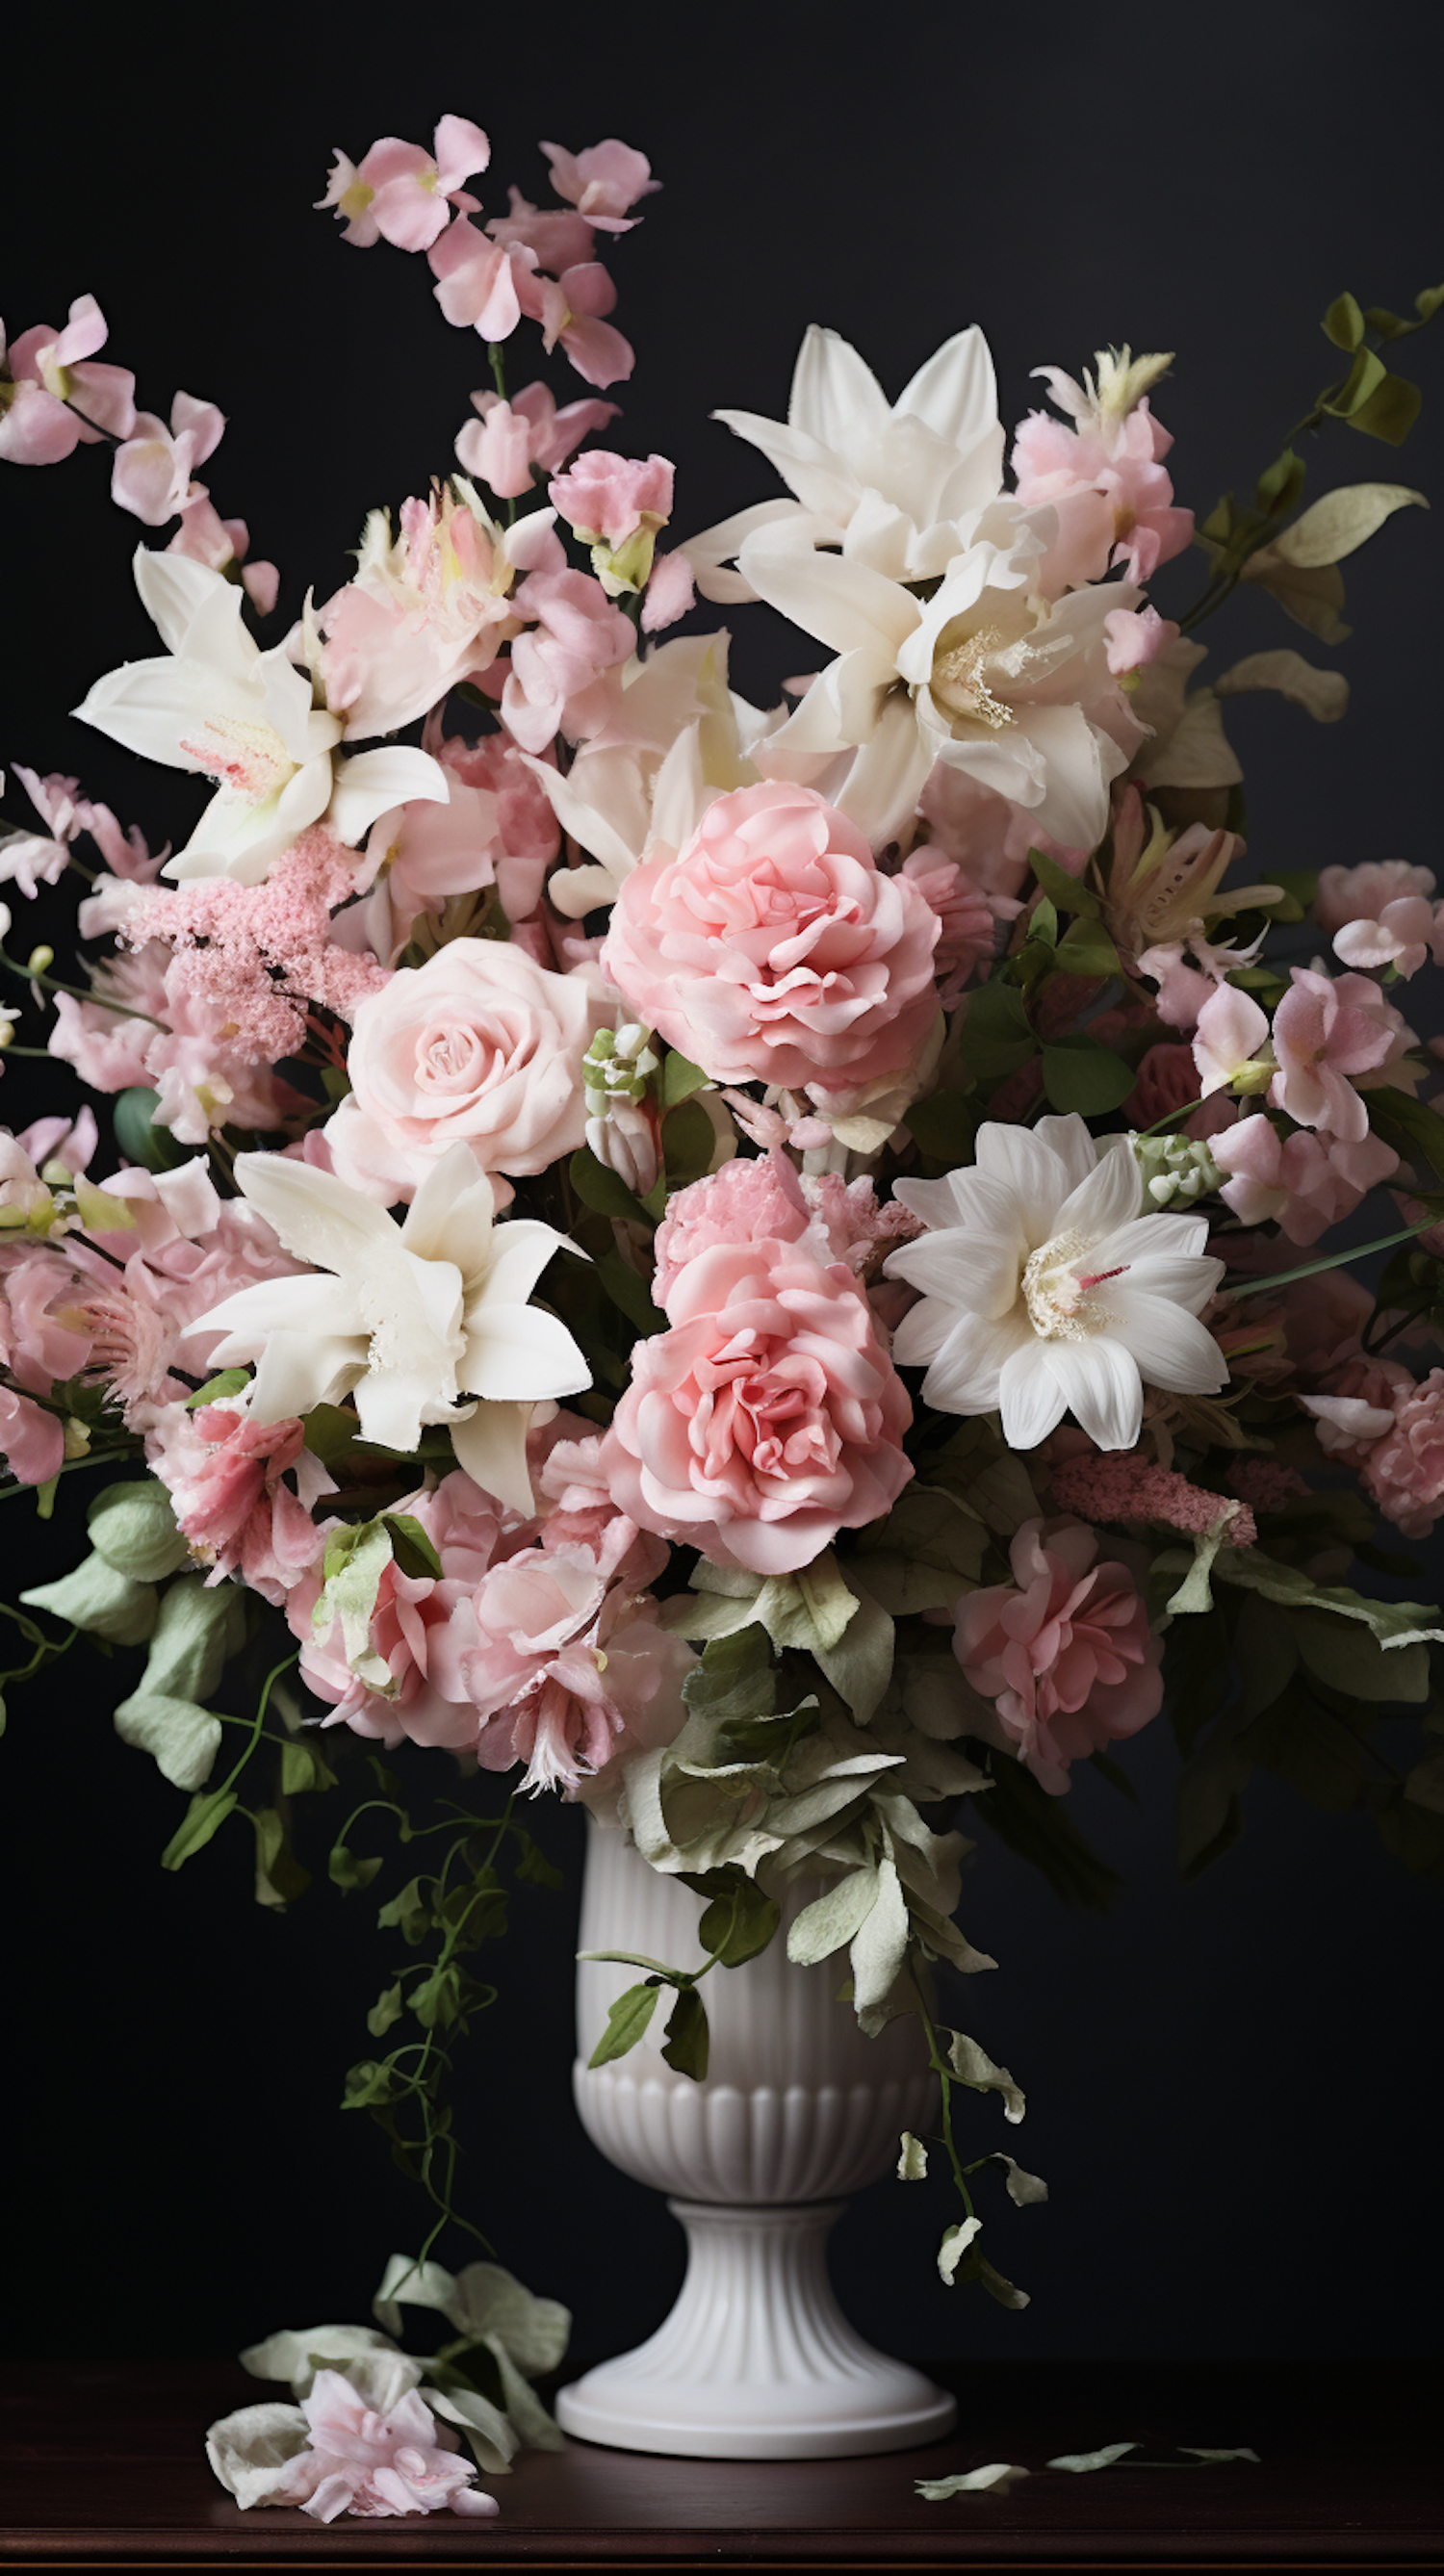 Sophisticated Pastel Floral Arrangement in Classic White Vase